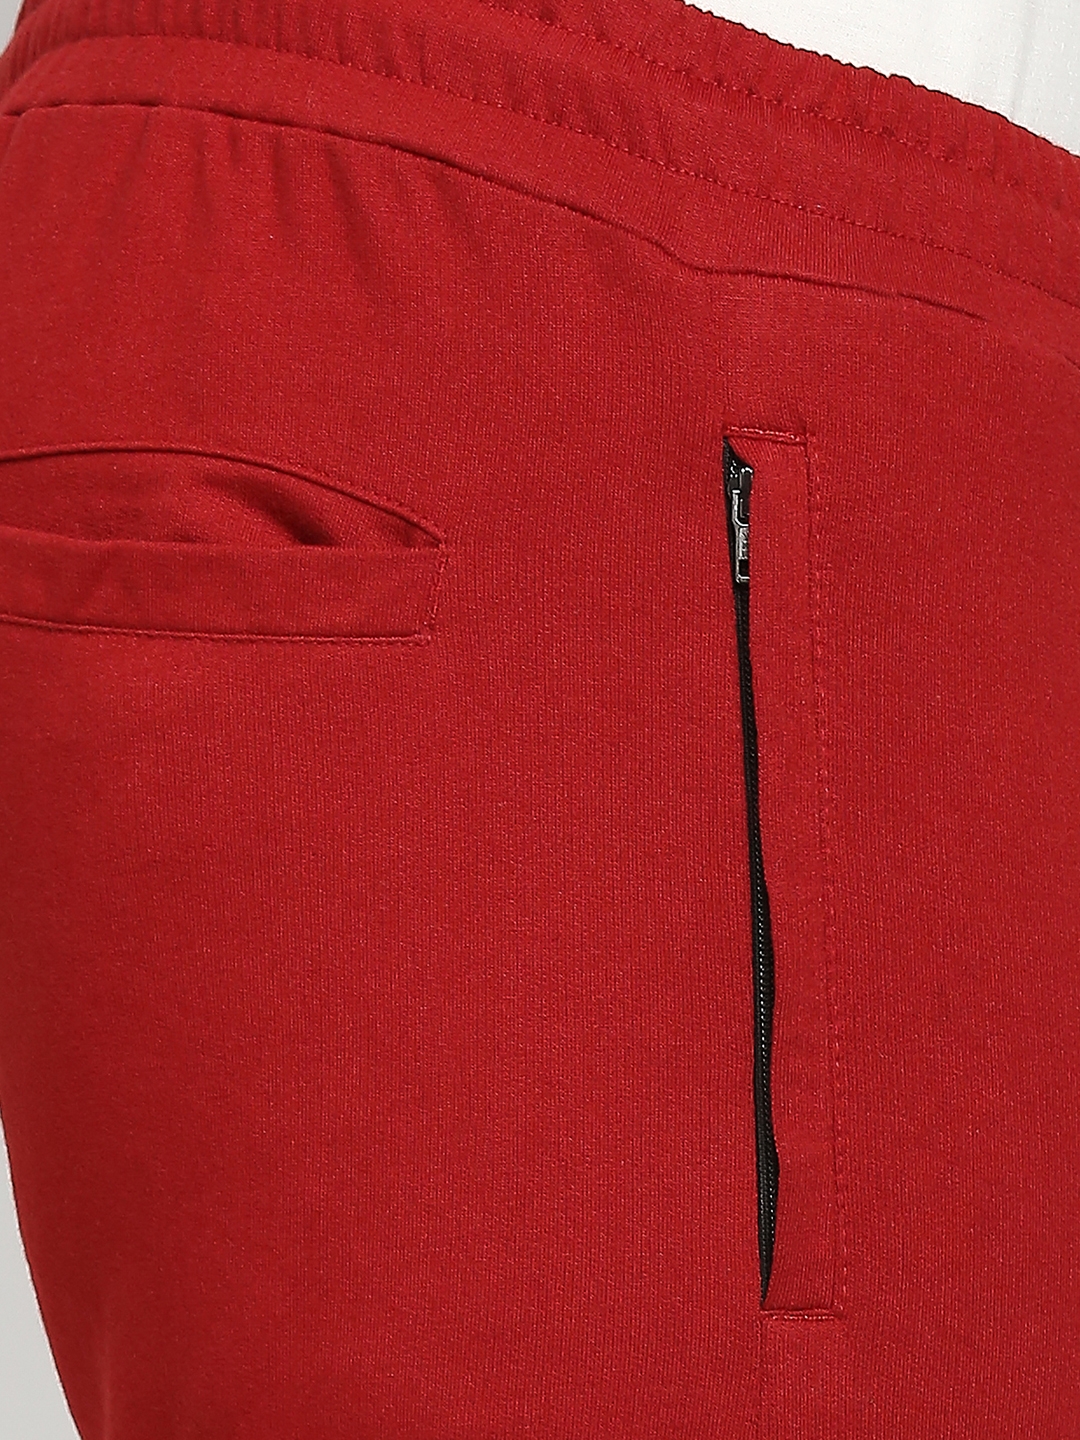 Fitz Solids Cotton Blend Regular Fit Track Pants - Maroon